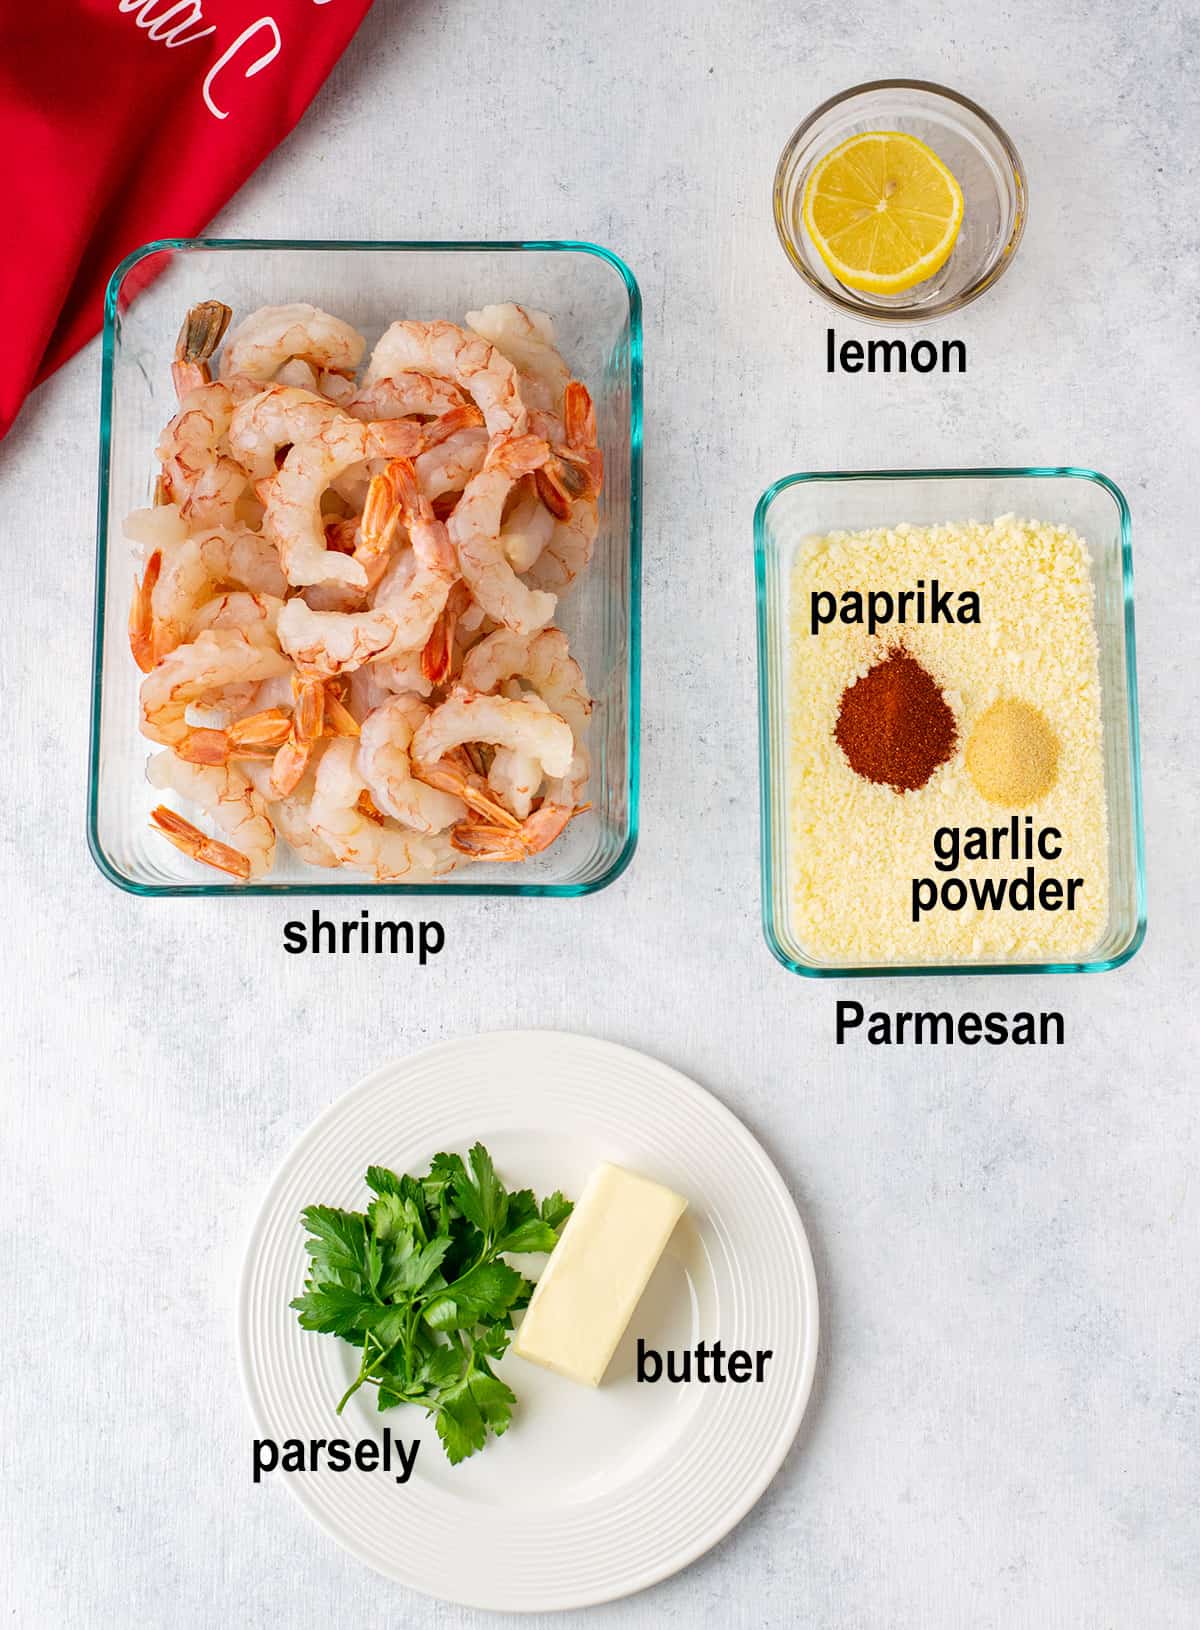 lemon, shrimp, paprika, garlic powder, Parmesan, parsley, butter